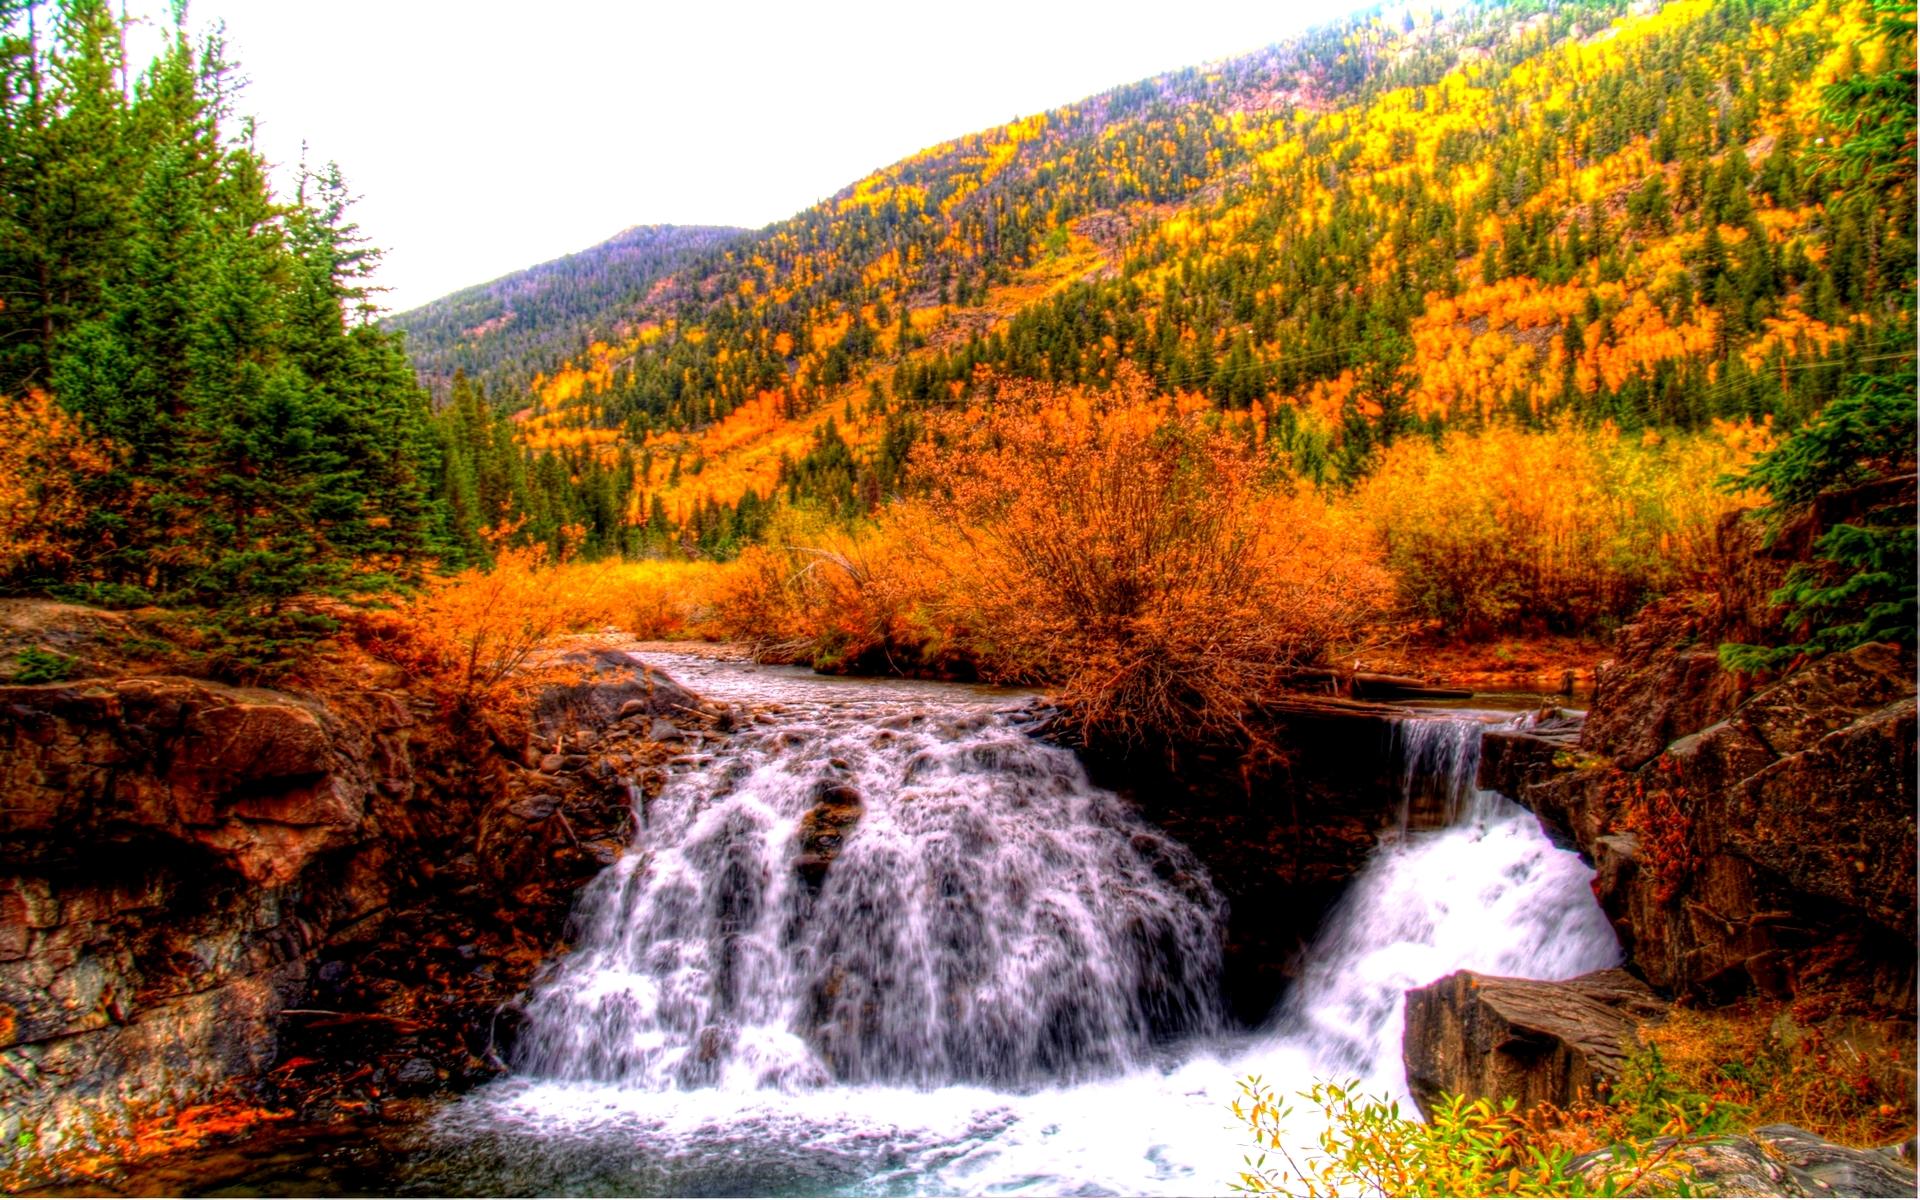 Waterfall in Autumn Mountains